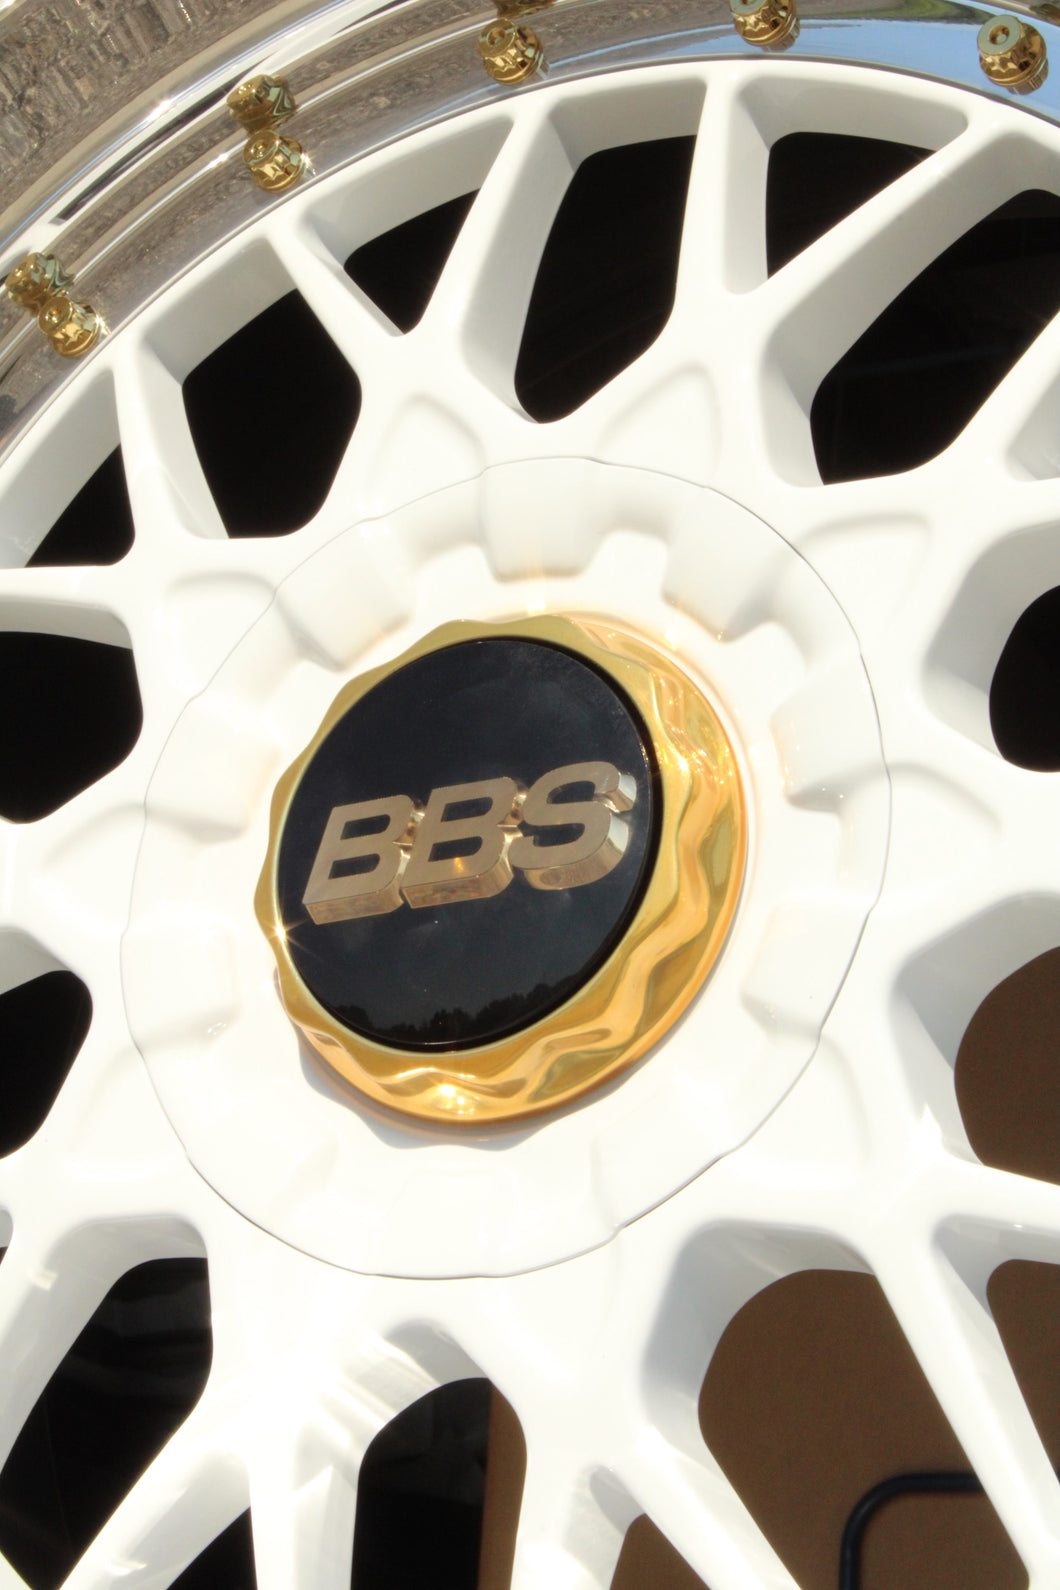 BBS logos : 80mm and 3 prong